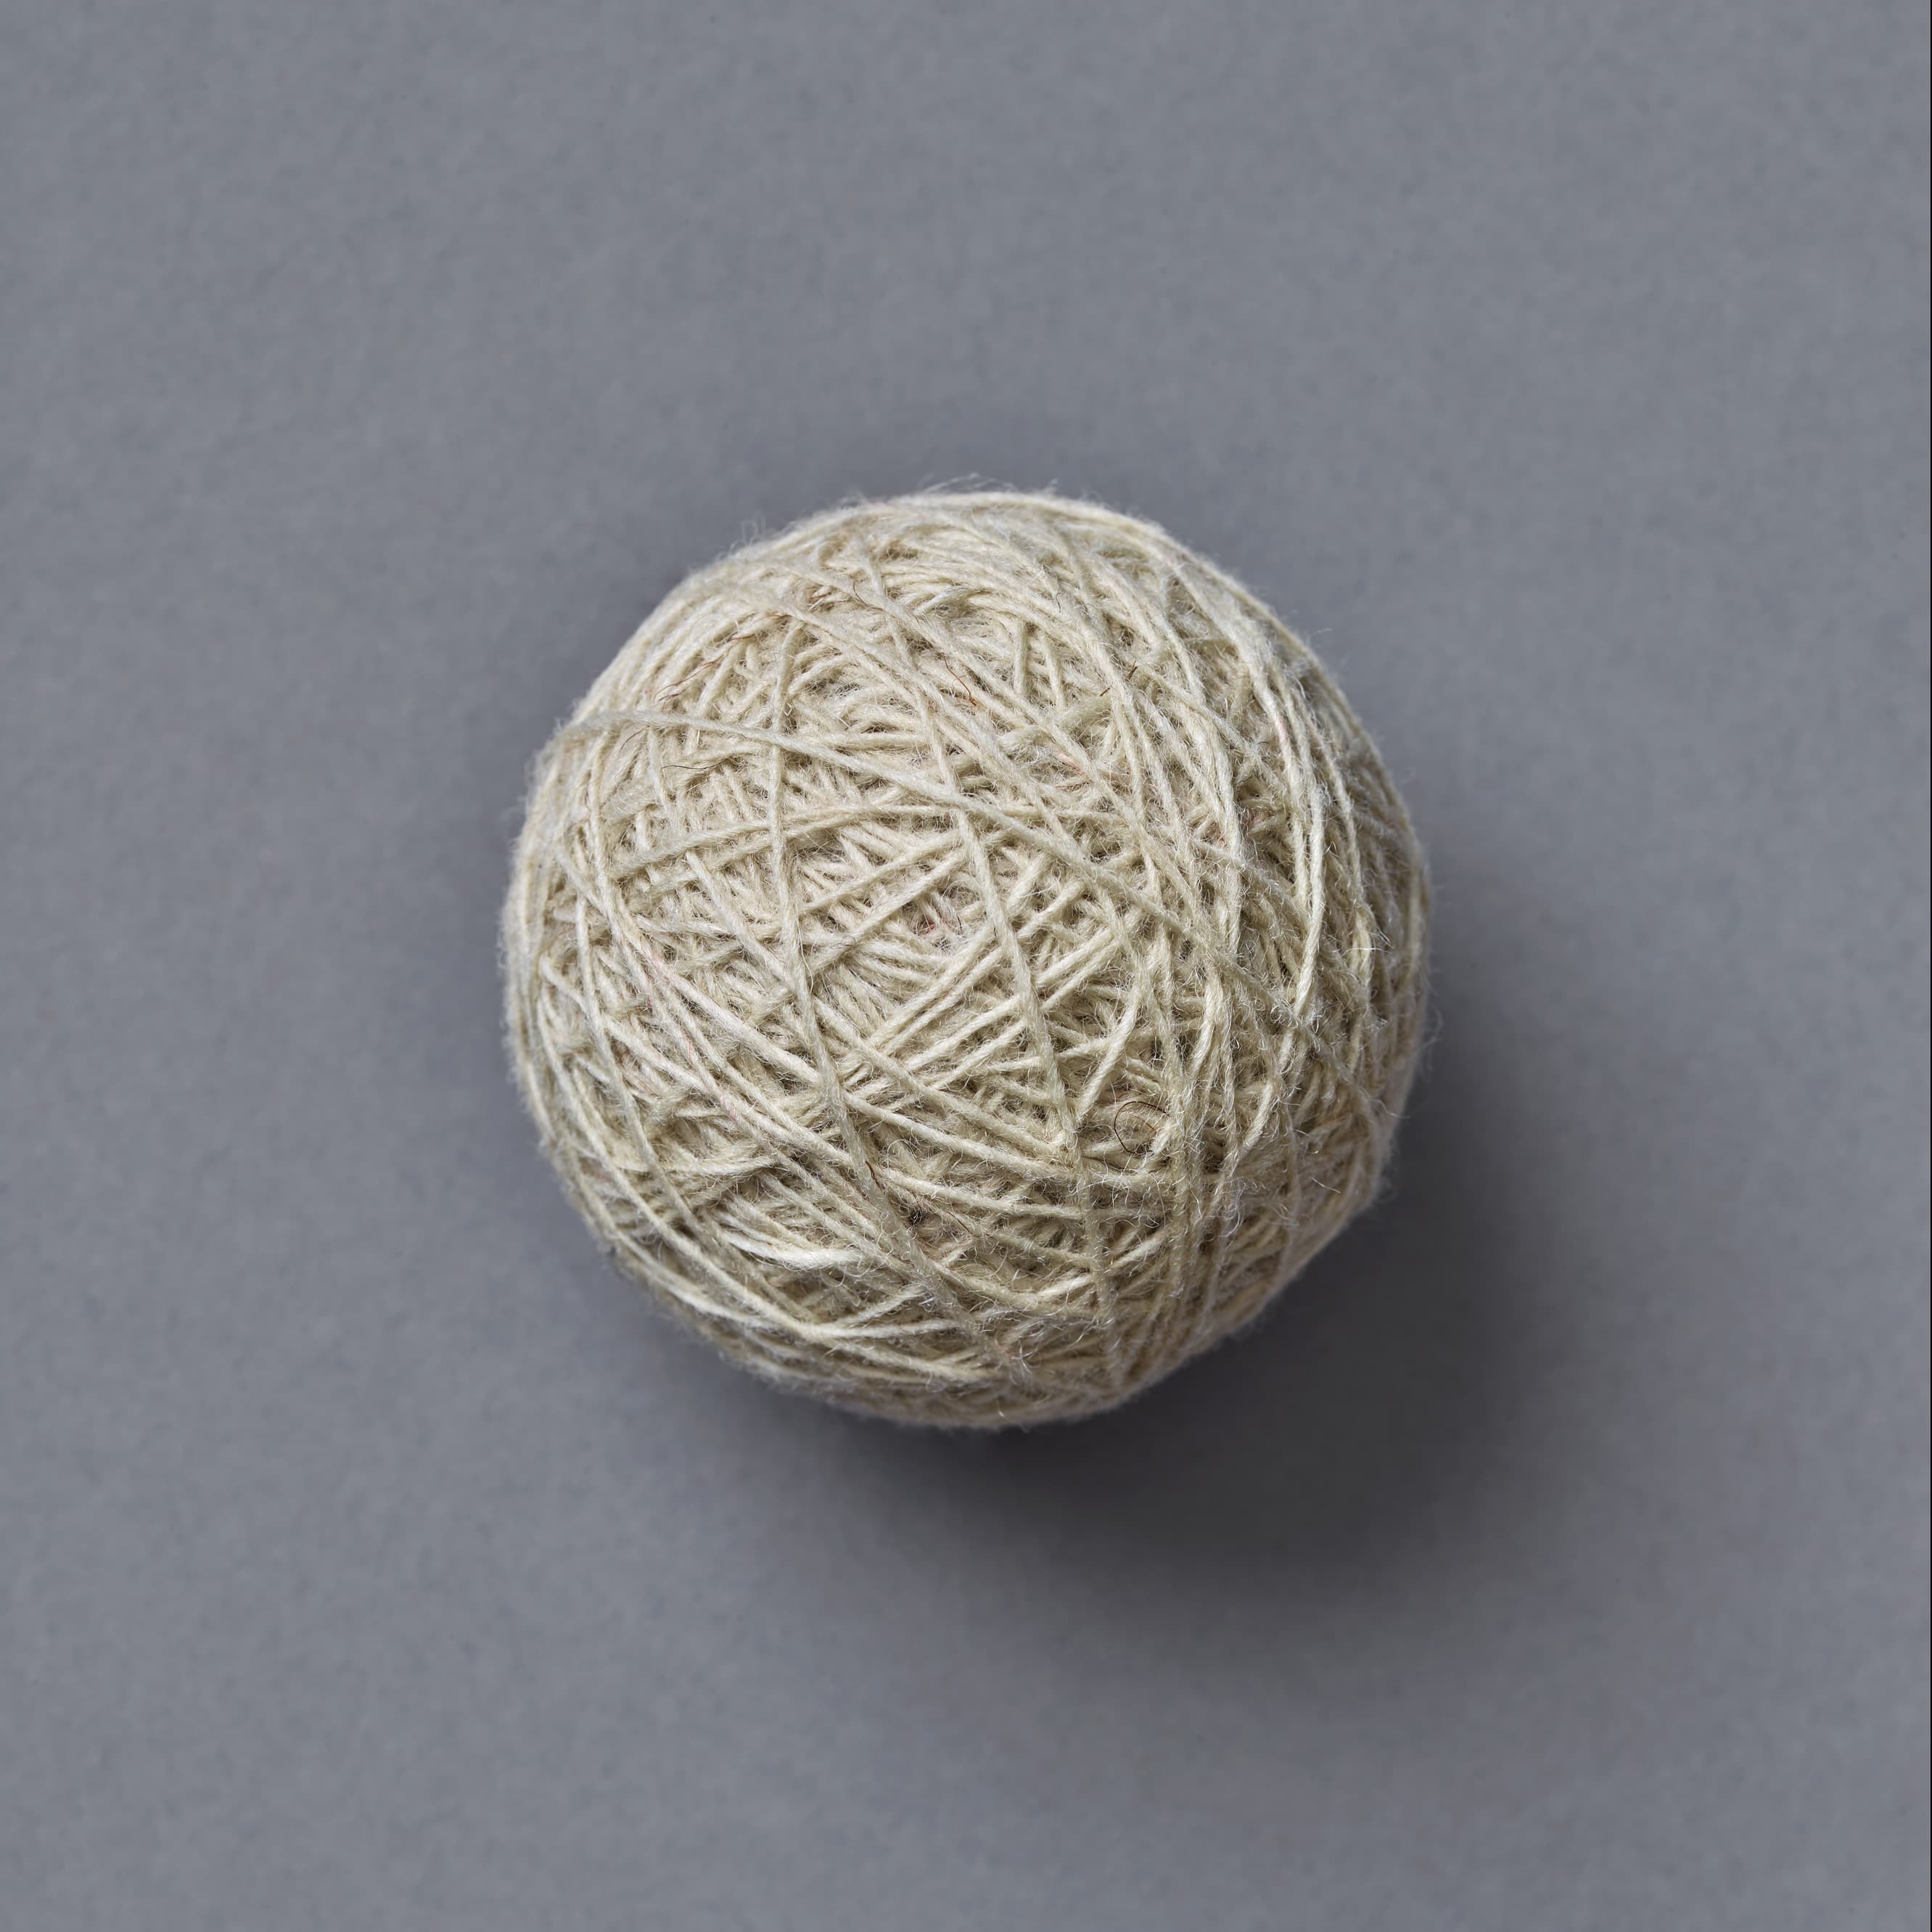 foto van een bolletje witte wol